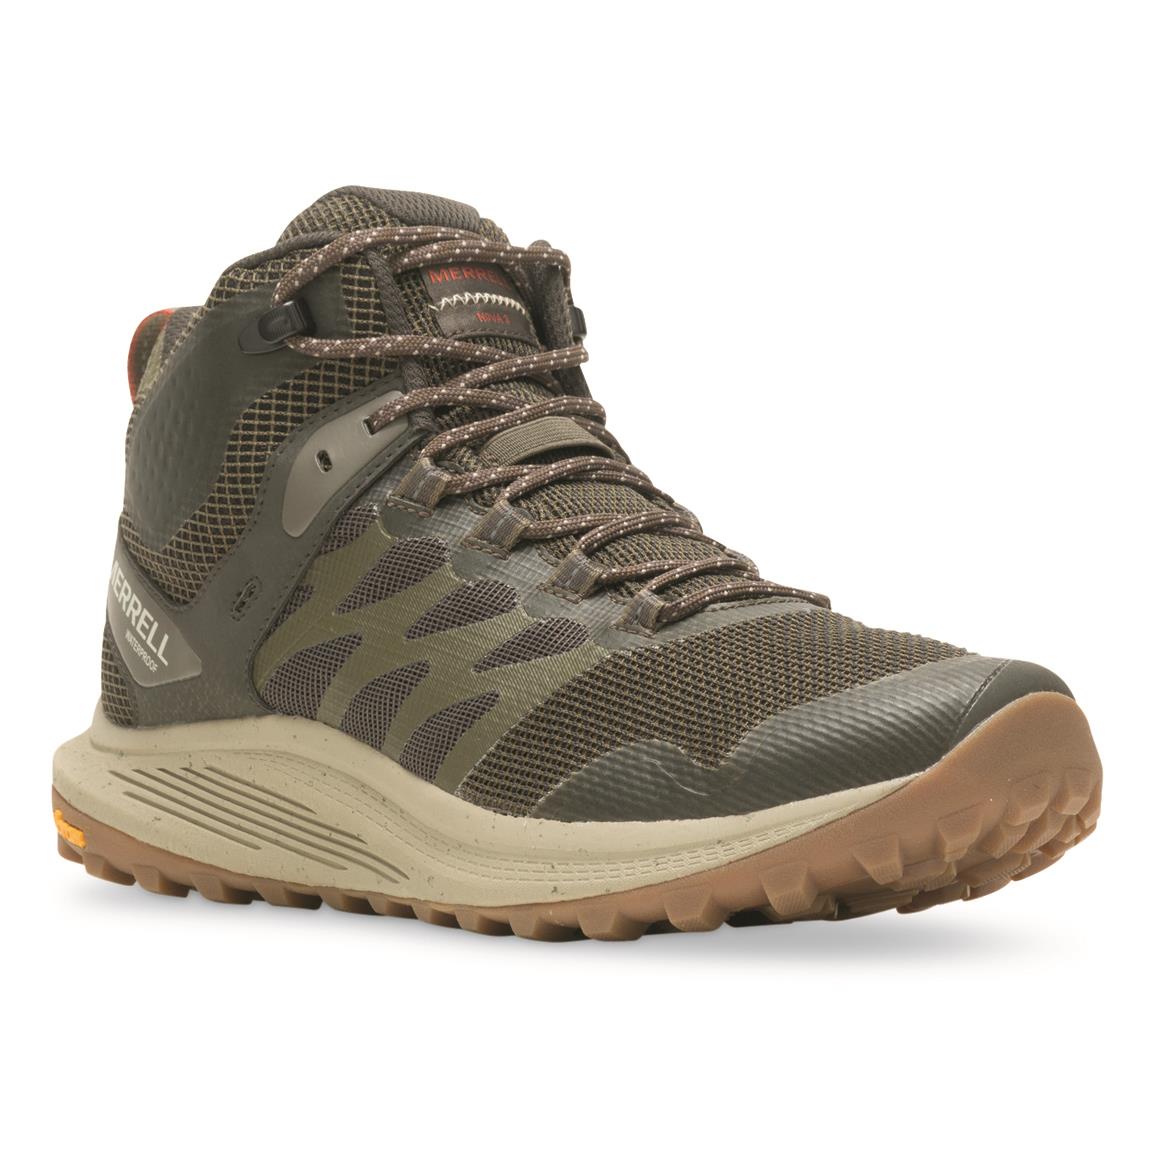 Merrell Men's Nova 3 Mid Waterproof Hiking Boots, Olive